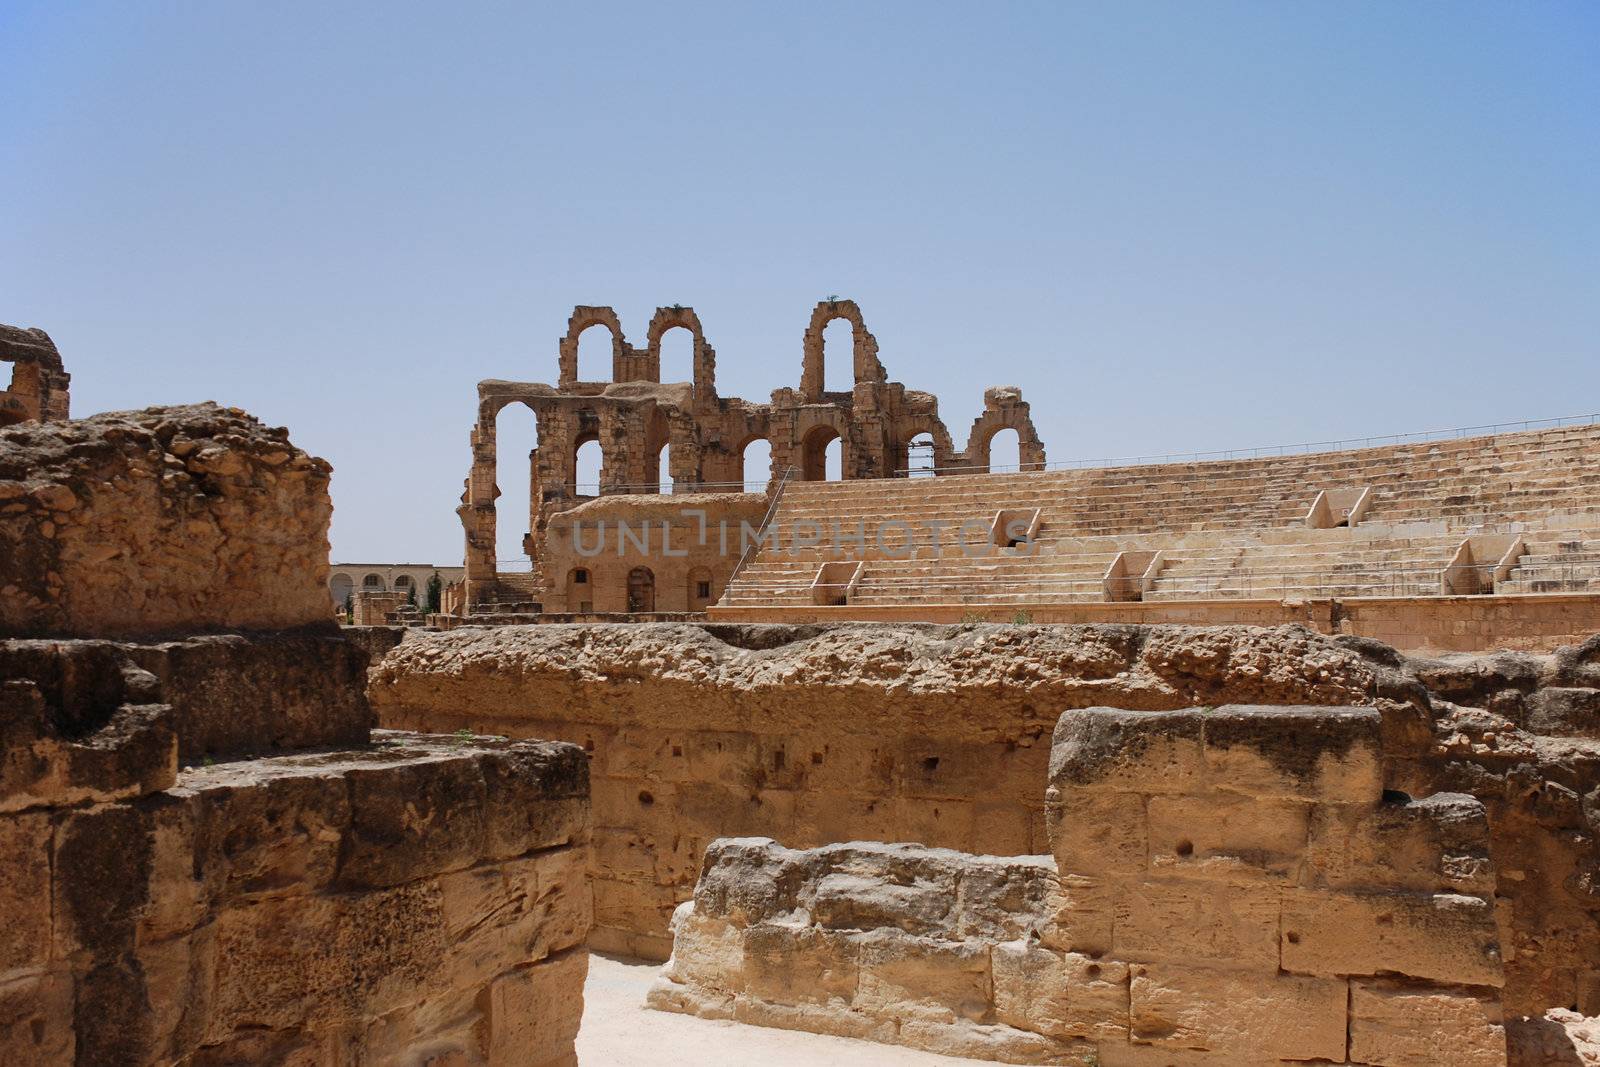  Roman Amphitheater in Tunisia by y_serge